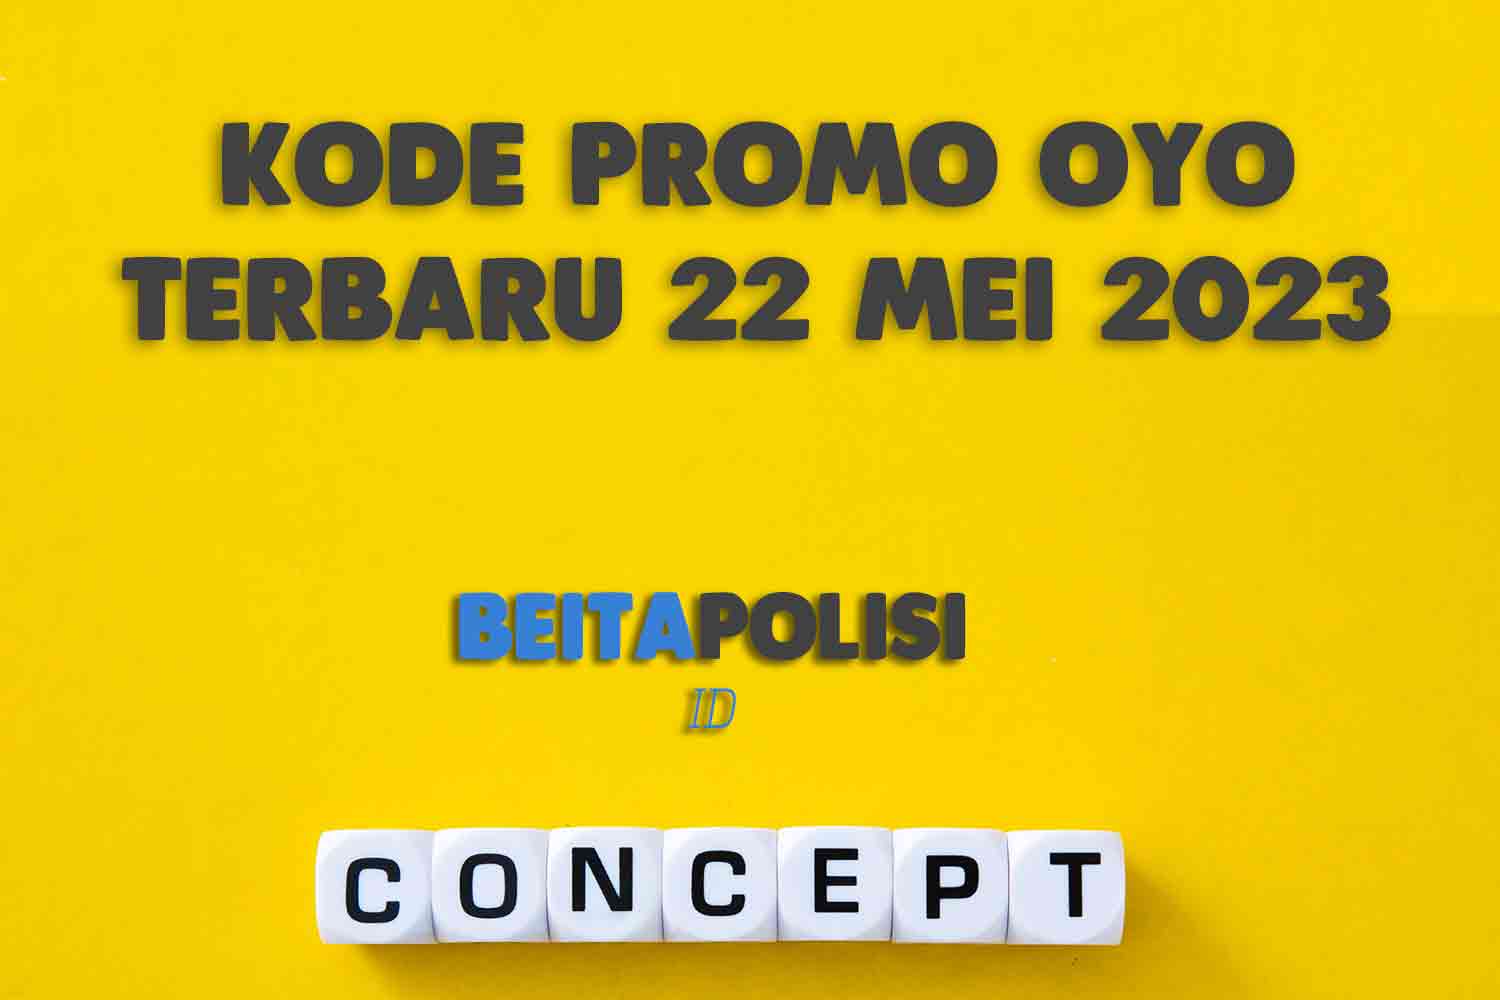 Kode Promo Oyo Terbaru 22 Mei 2023